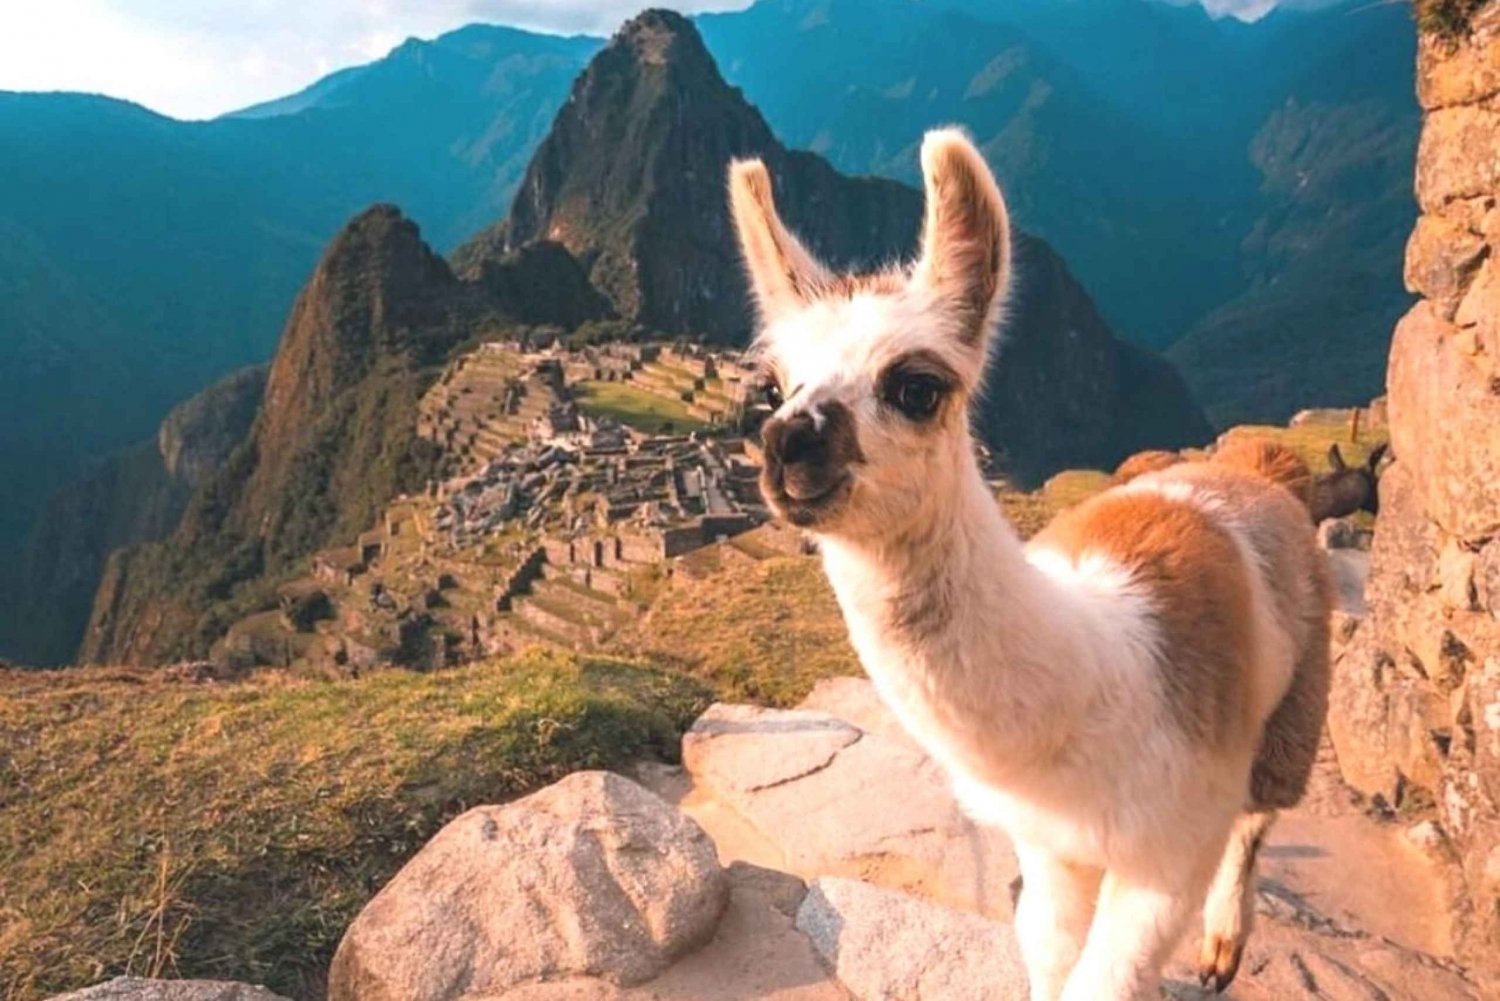 Aguas Calientes: Machu Picchu Ticket, Bus, and Private Guide